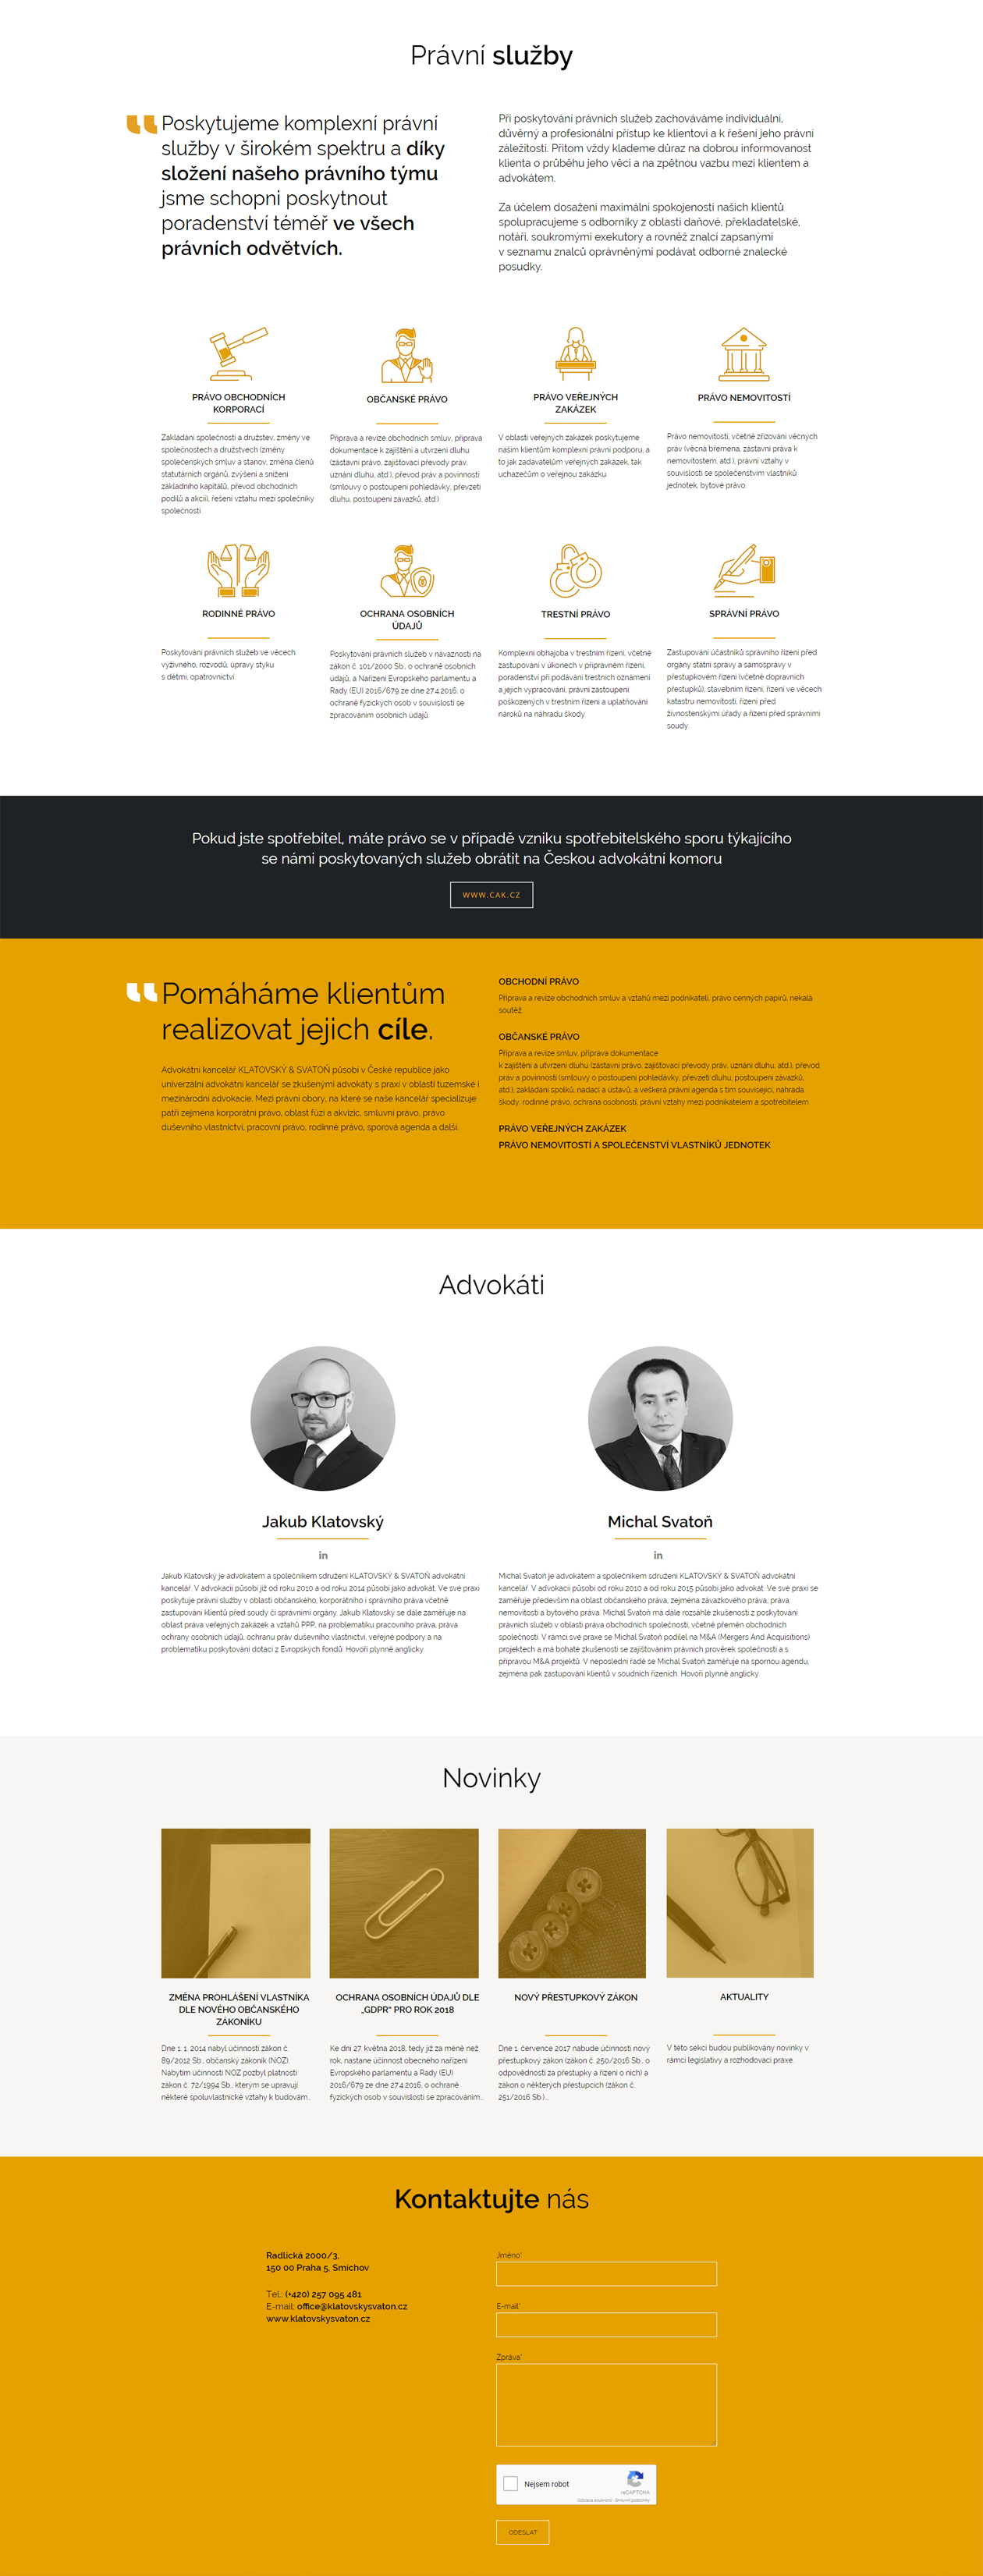 webdesign Klatovský & Svatoň